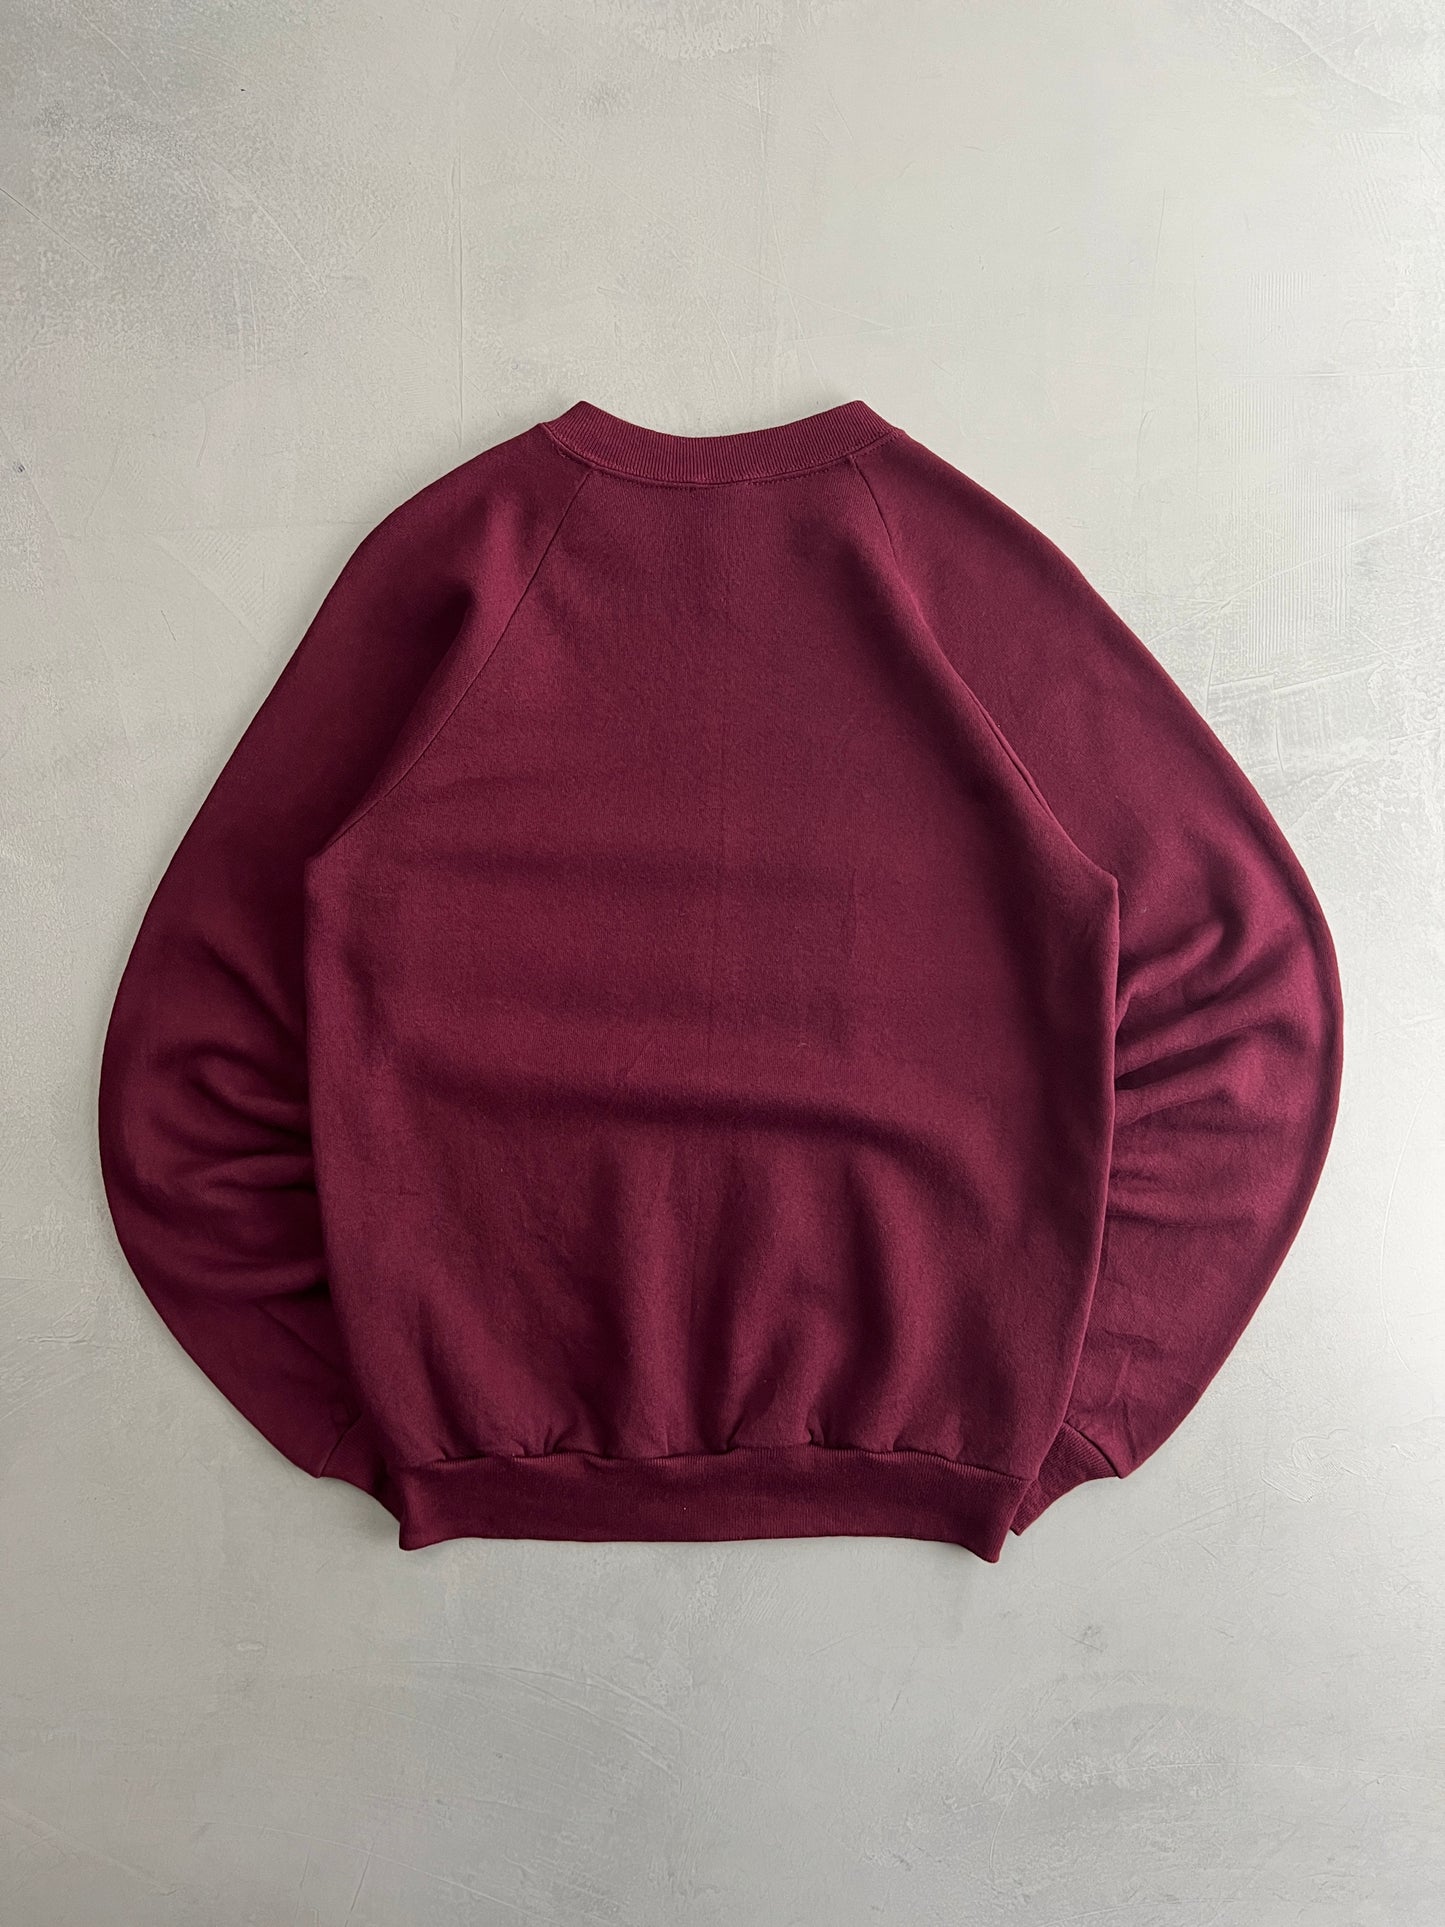 90's Labrador Retriever Sweatshirt [M]